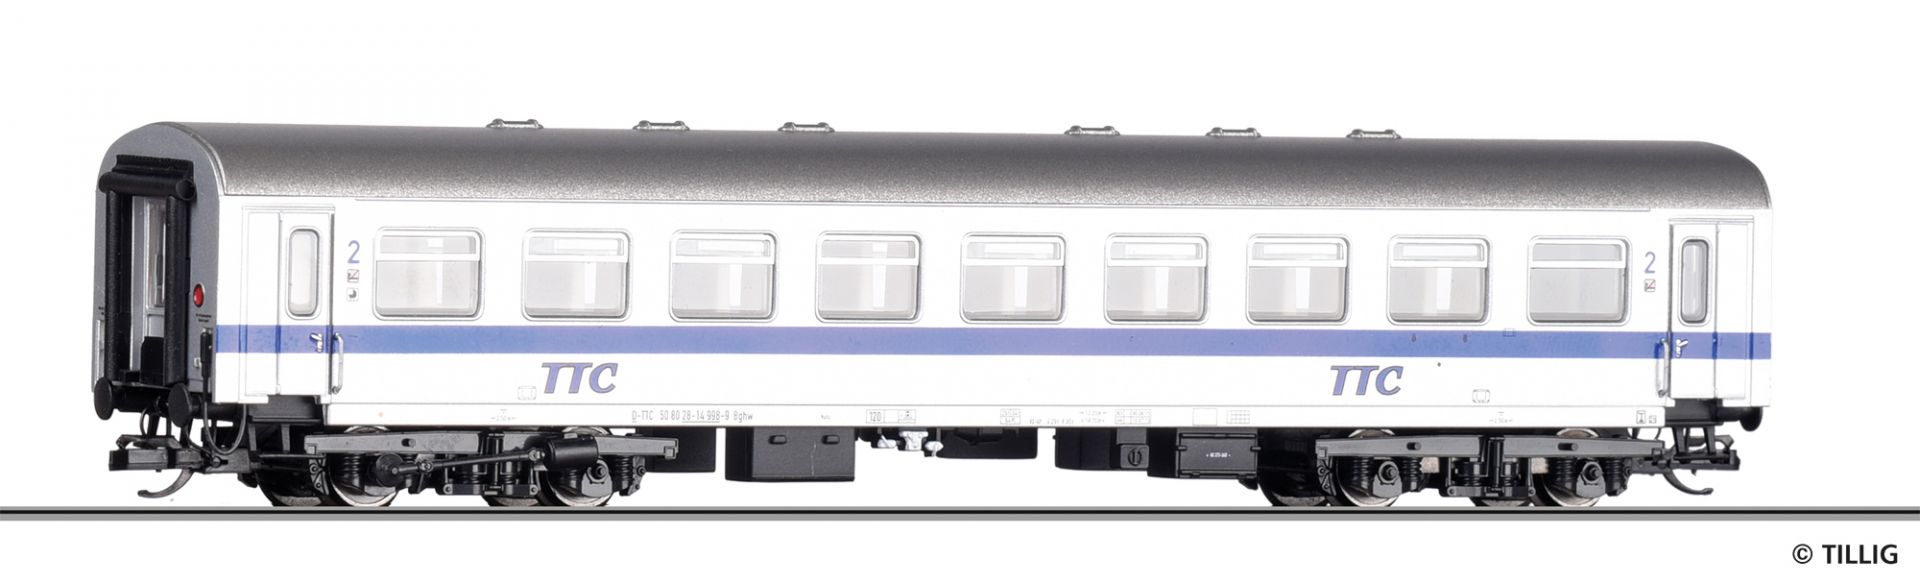 502409 | Passenger coach TTC